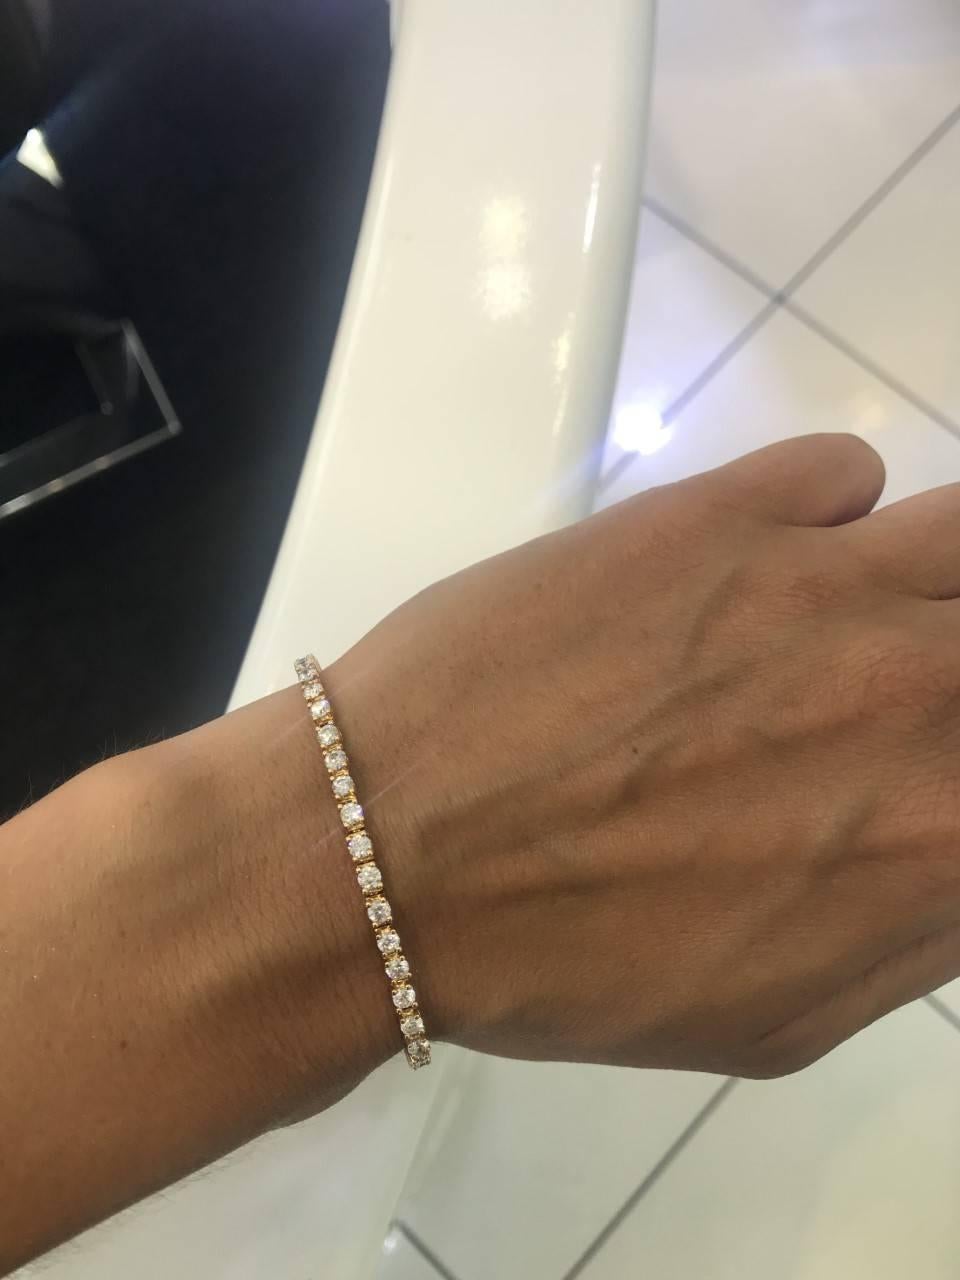 expensive tennis bracelet